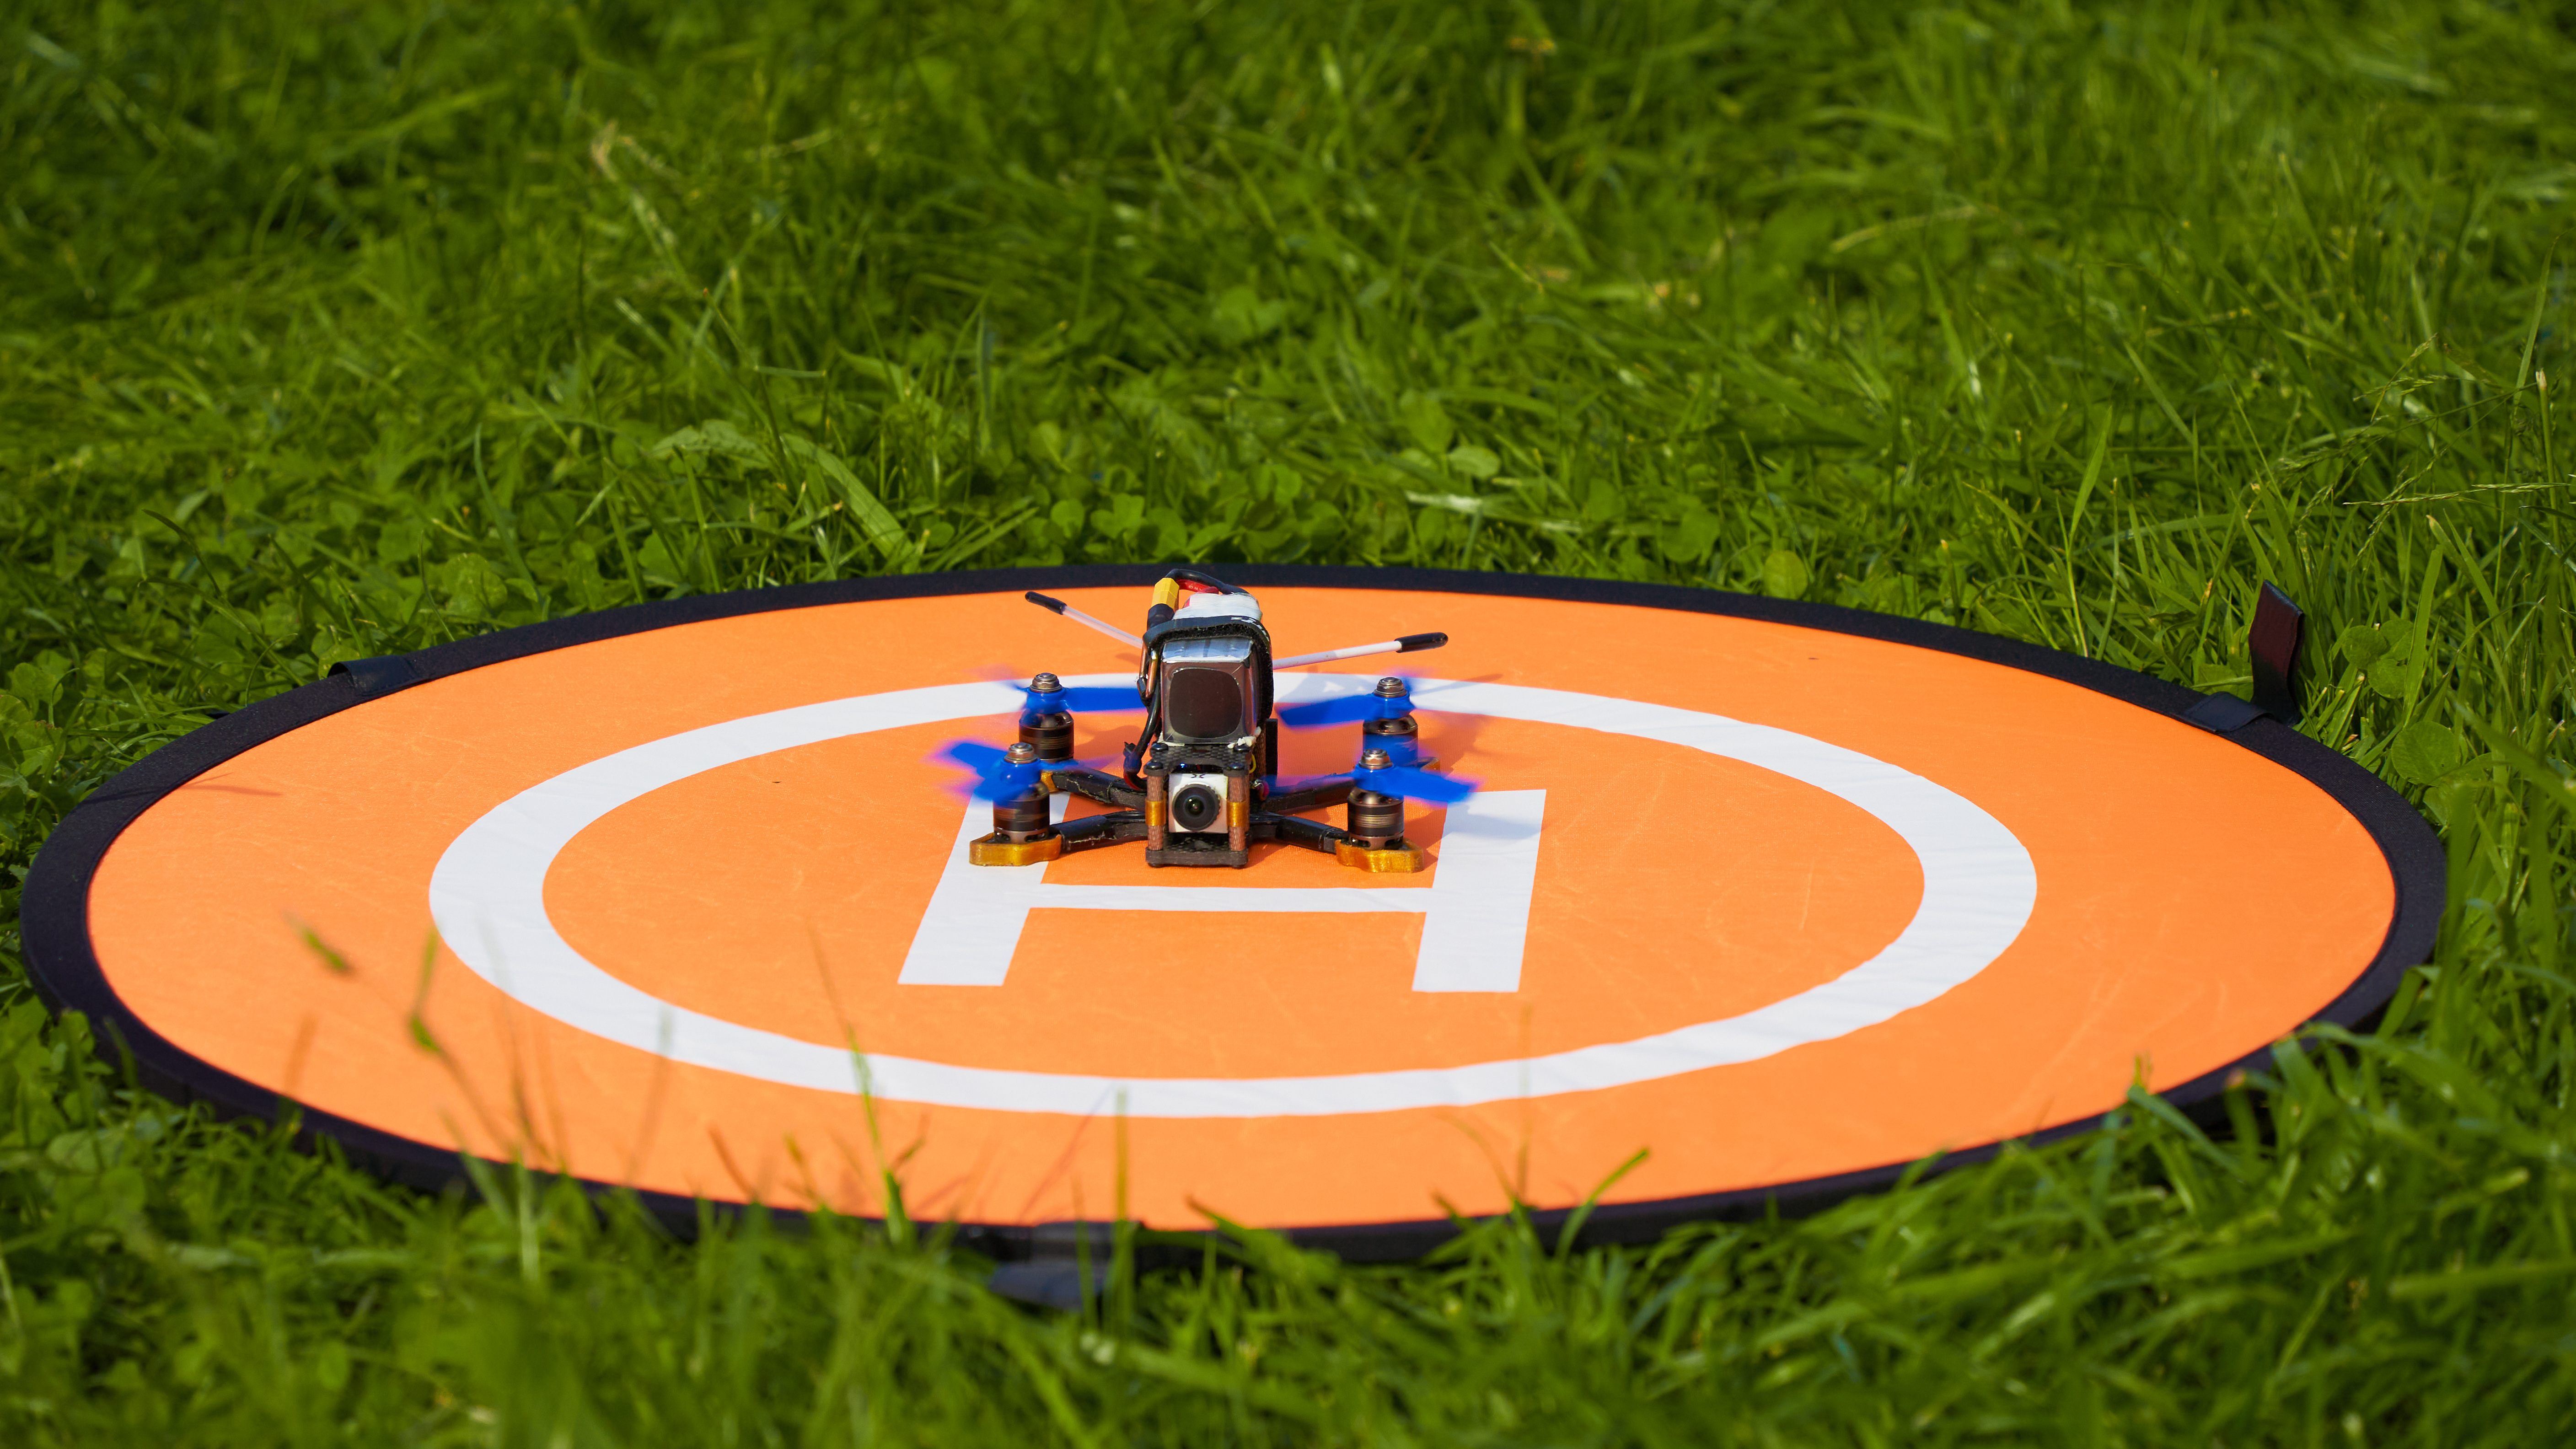 YIVIVEN Drone Landing Pad Indoor Drone Landing Pad Indoor Drone Course Pad 